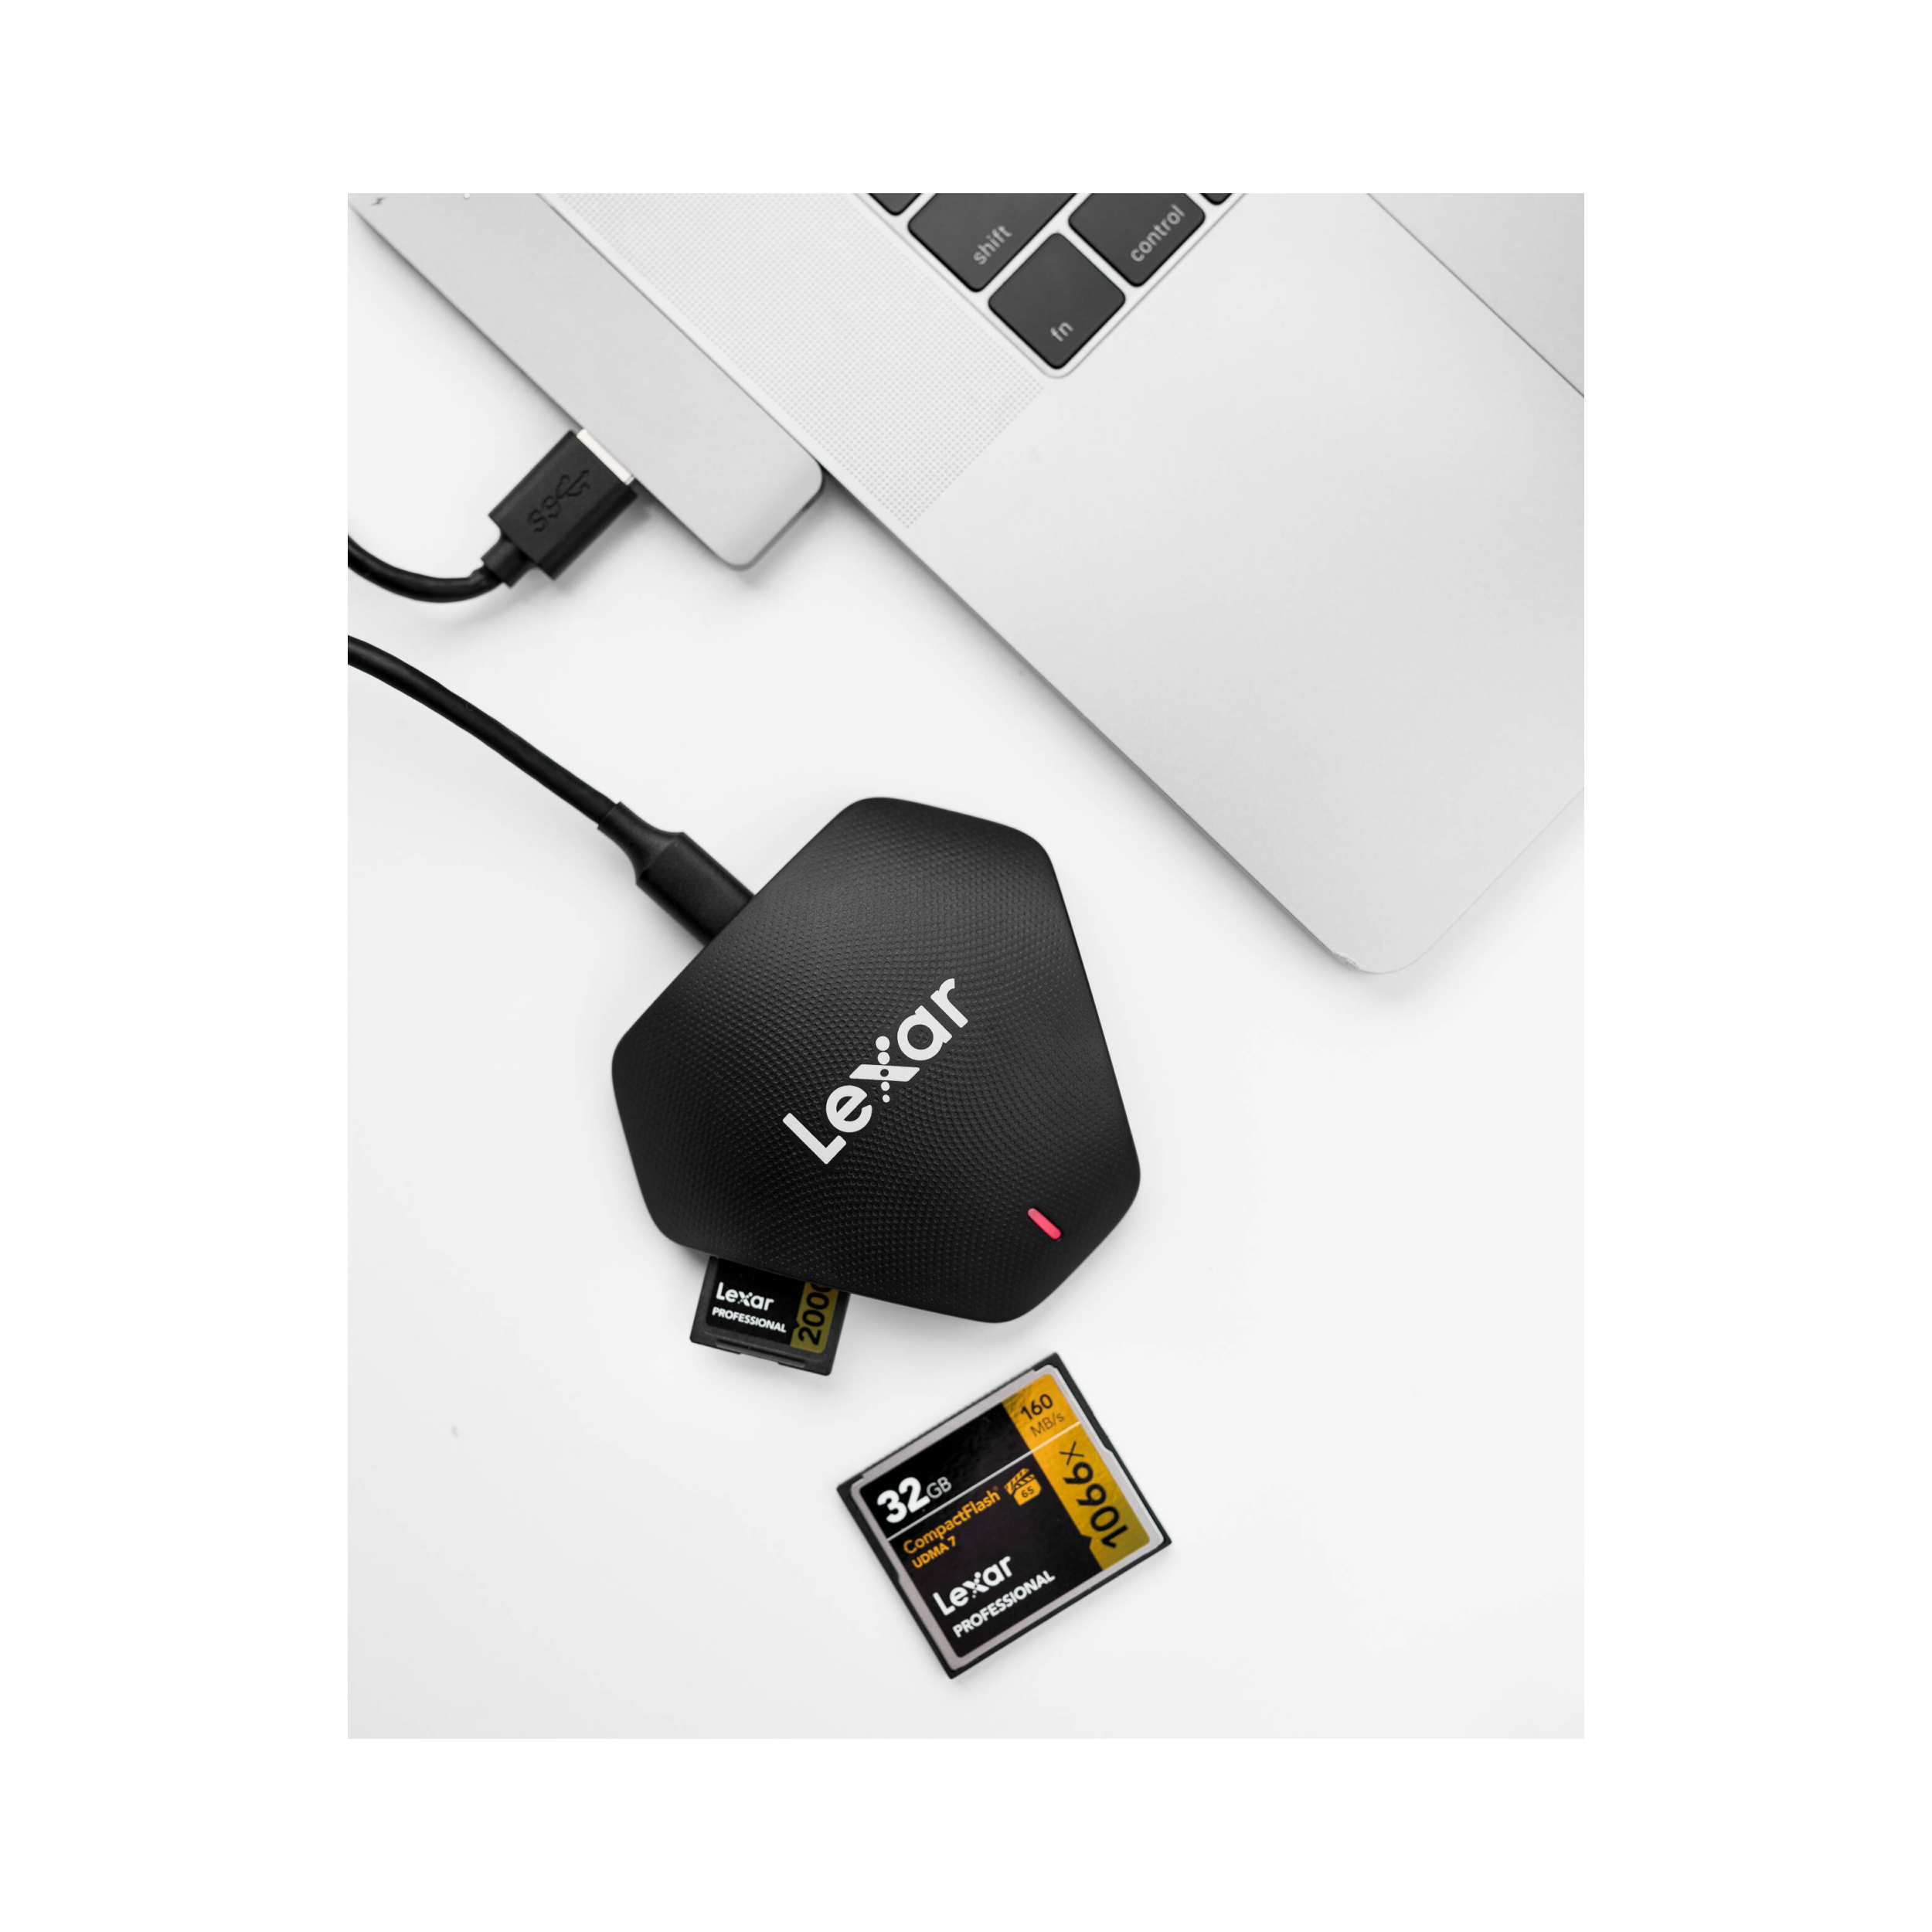 Lexar Professional Multi-Card 3-in-1 USB 3.0 Reader- Damaged Box